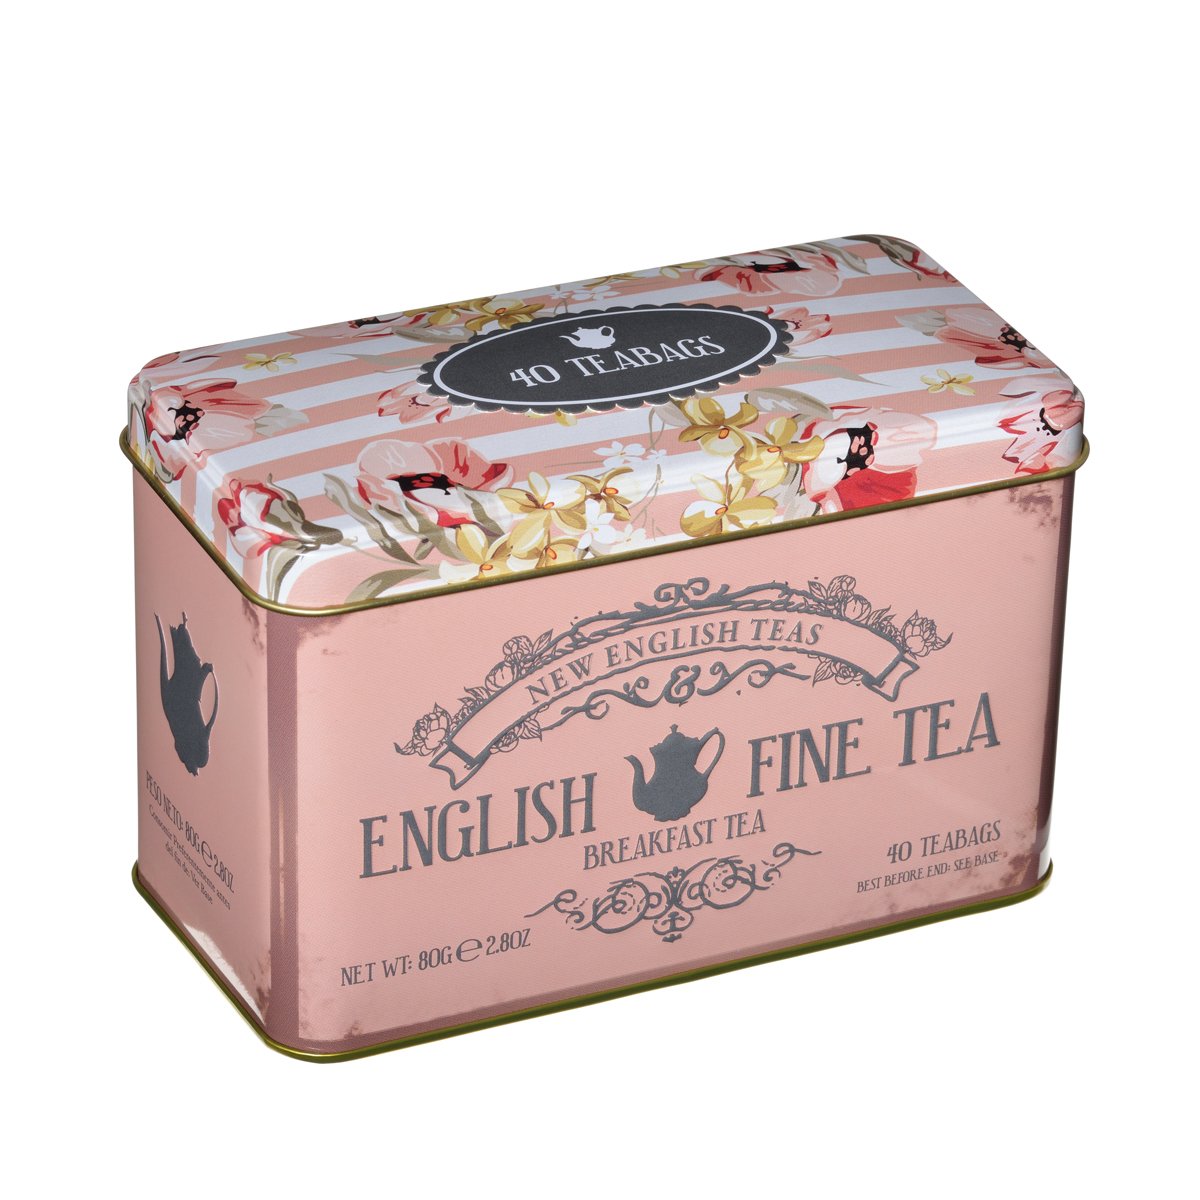 New English Teas Floral Tea Tin with 40 English Breakfast Teabags